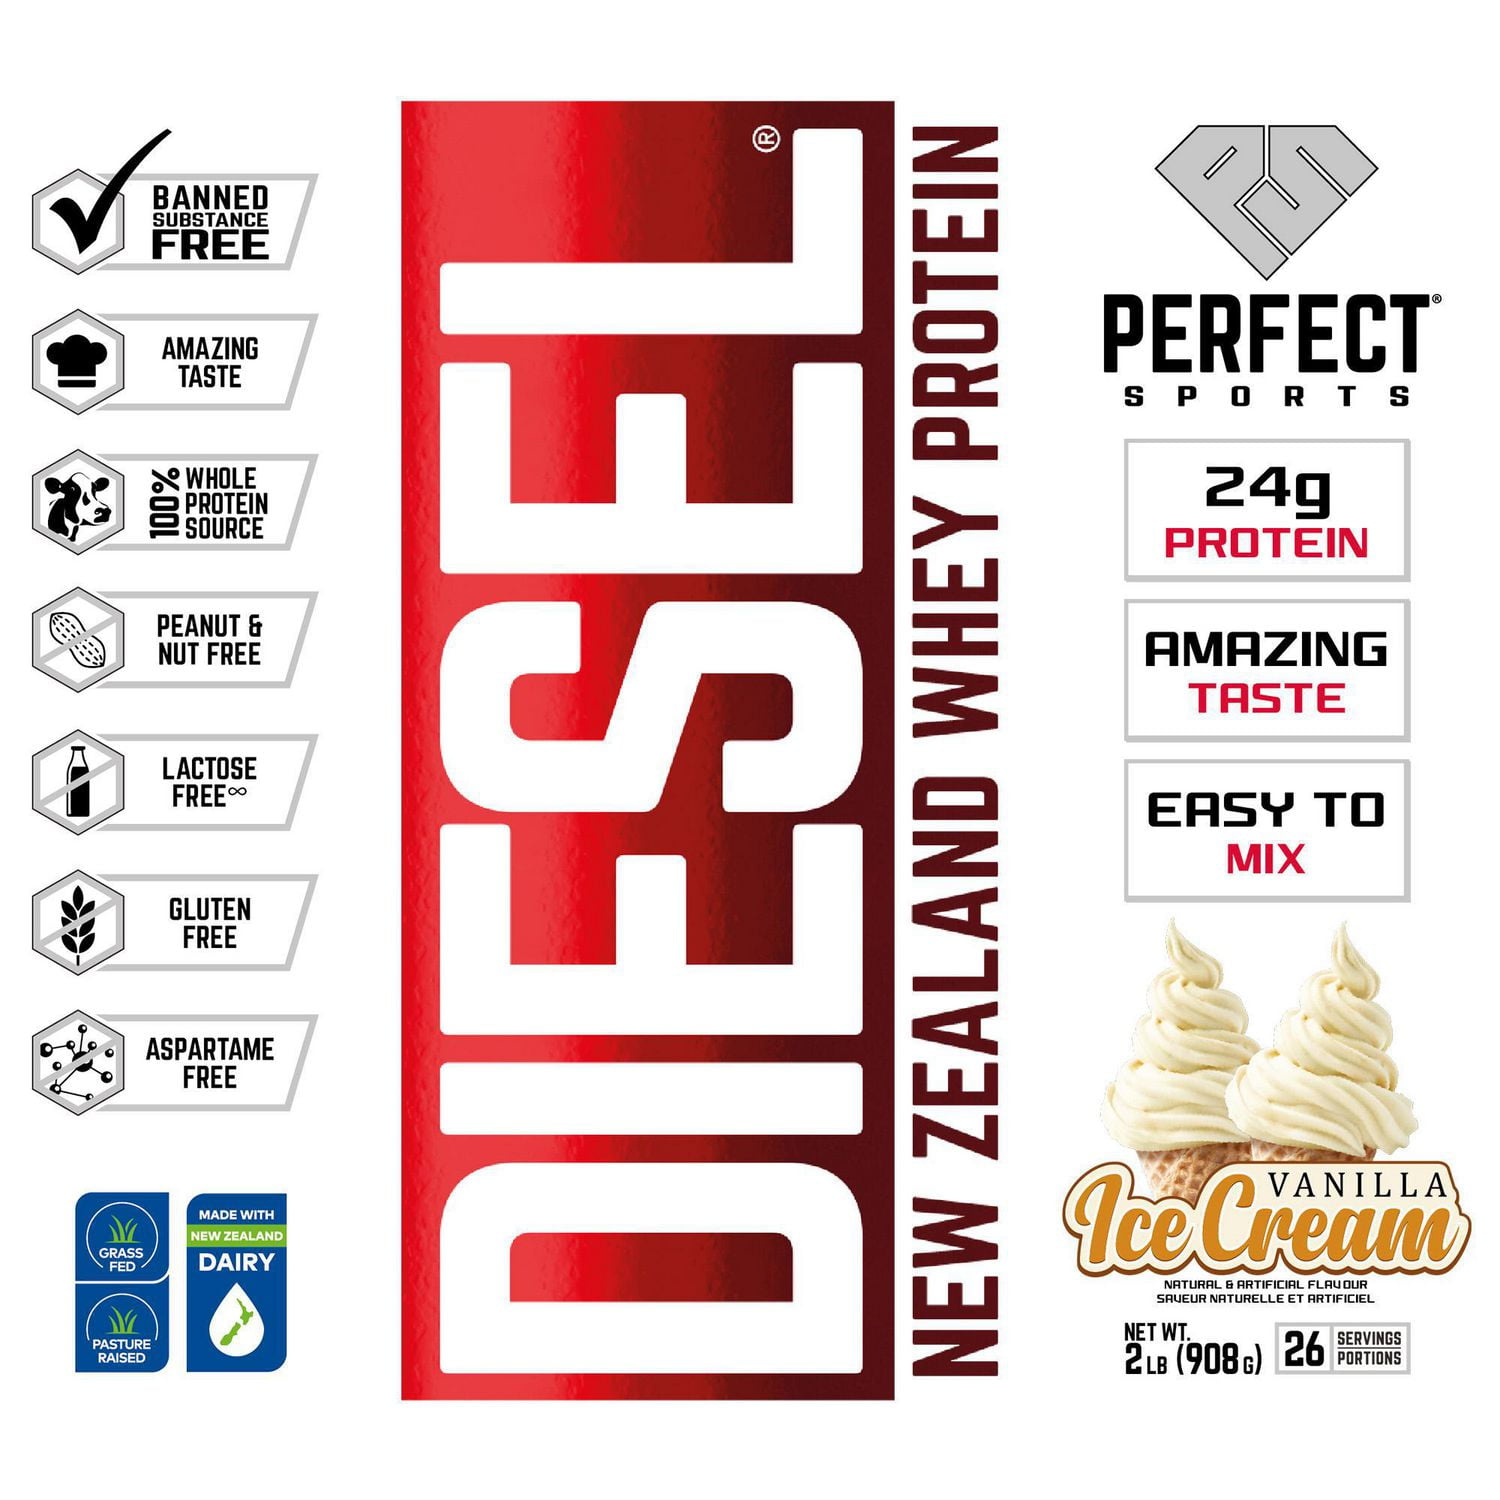 PERFECT Sports - DIESEL New Zealand Whey Protein, Grass-Fed +  Pasture-Raised Whey Protein Powder, Gluten-Free, Vanilla Ice Cream, 2 lbs  (908 g), Whey Protein, 2lb 